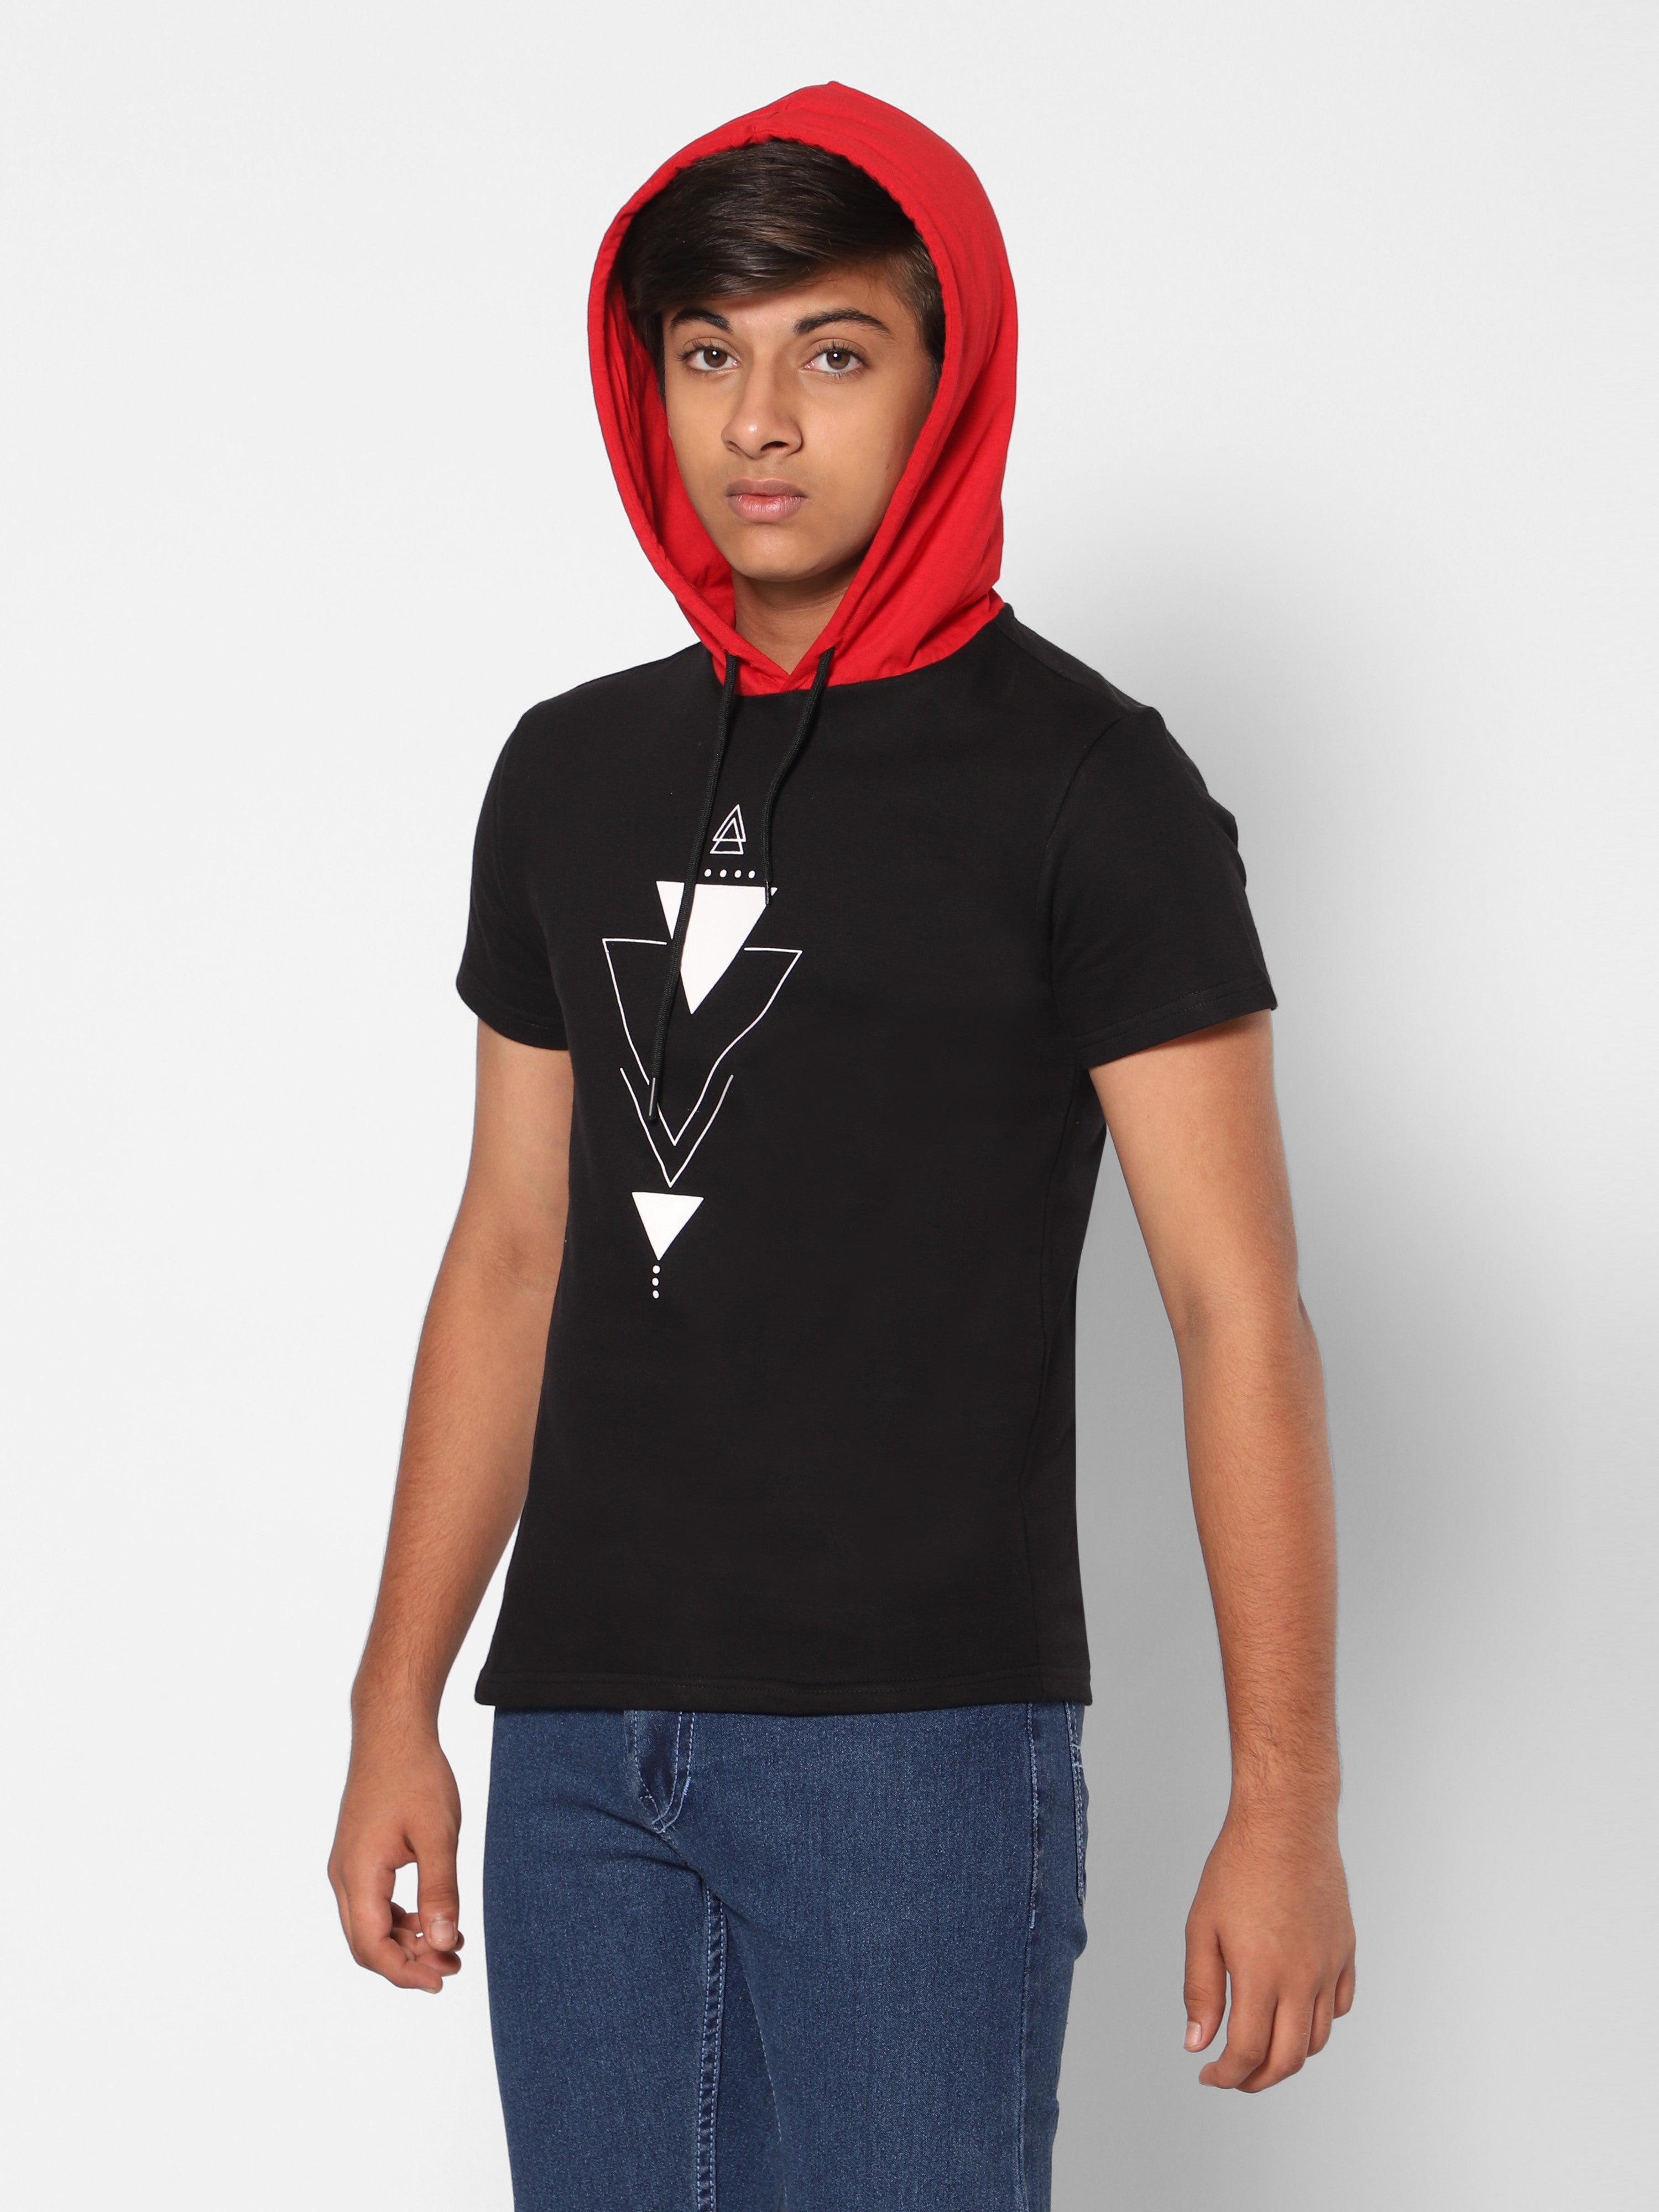 TeenTrums Regular Boys Fashion T-shirt with hoodie - Geometric art - Black & Red